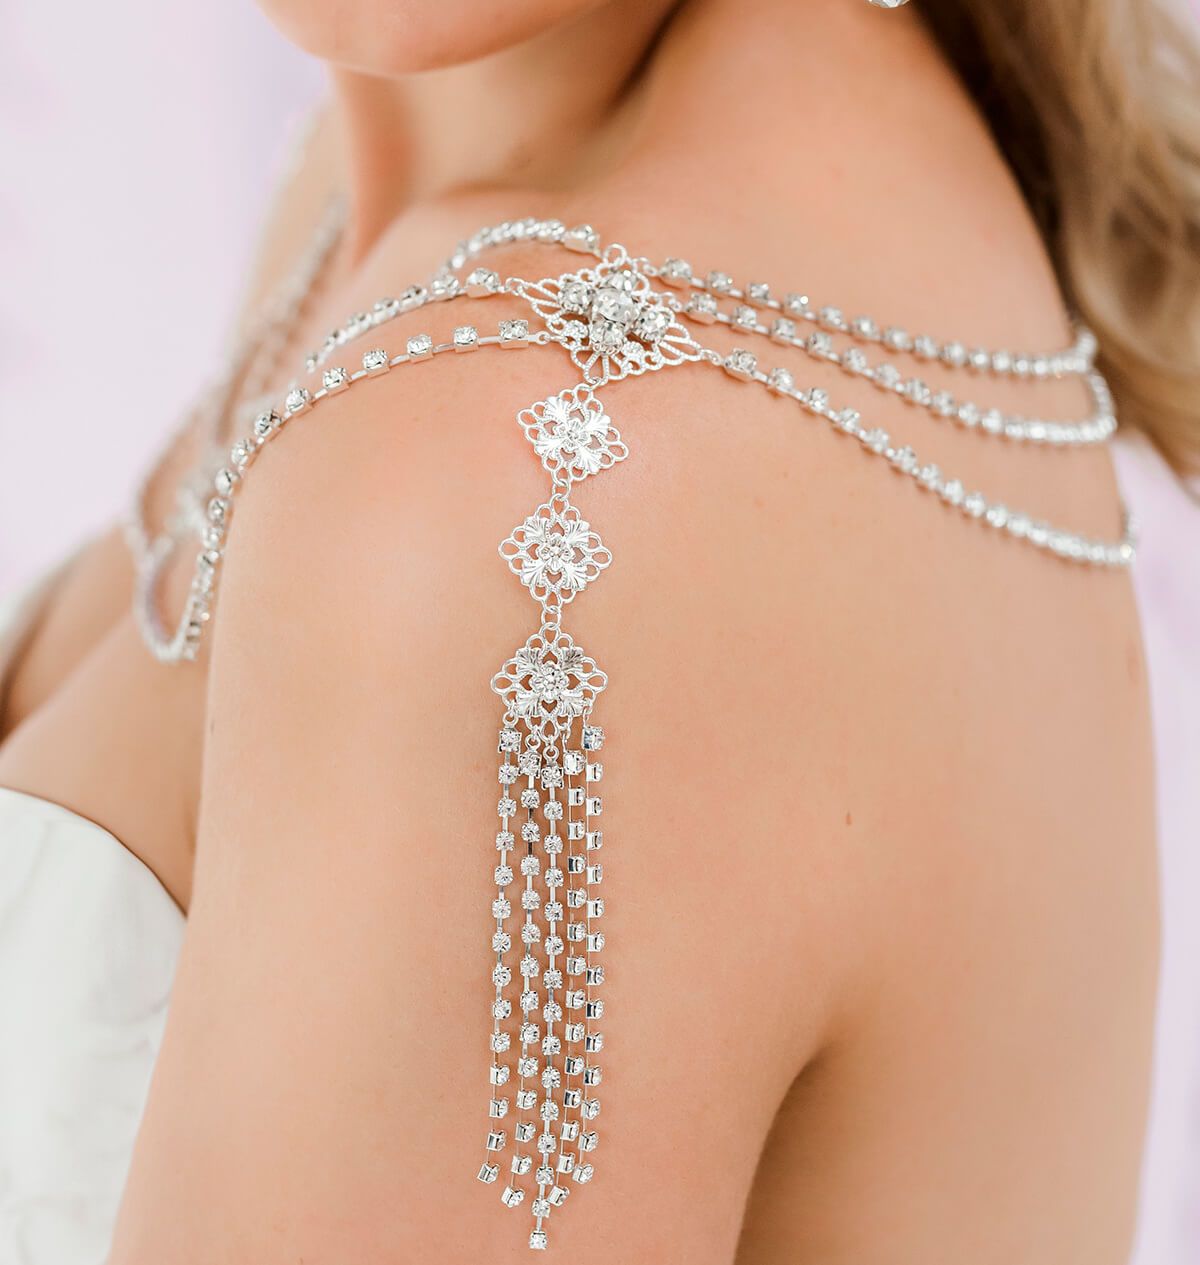 Silver Nicola Bridal Shoulder Necklace from side